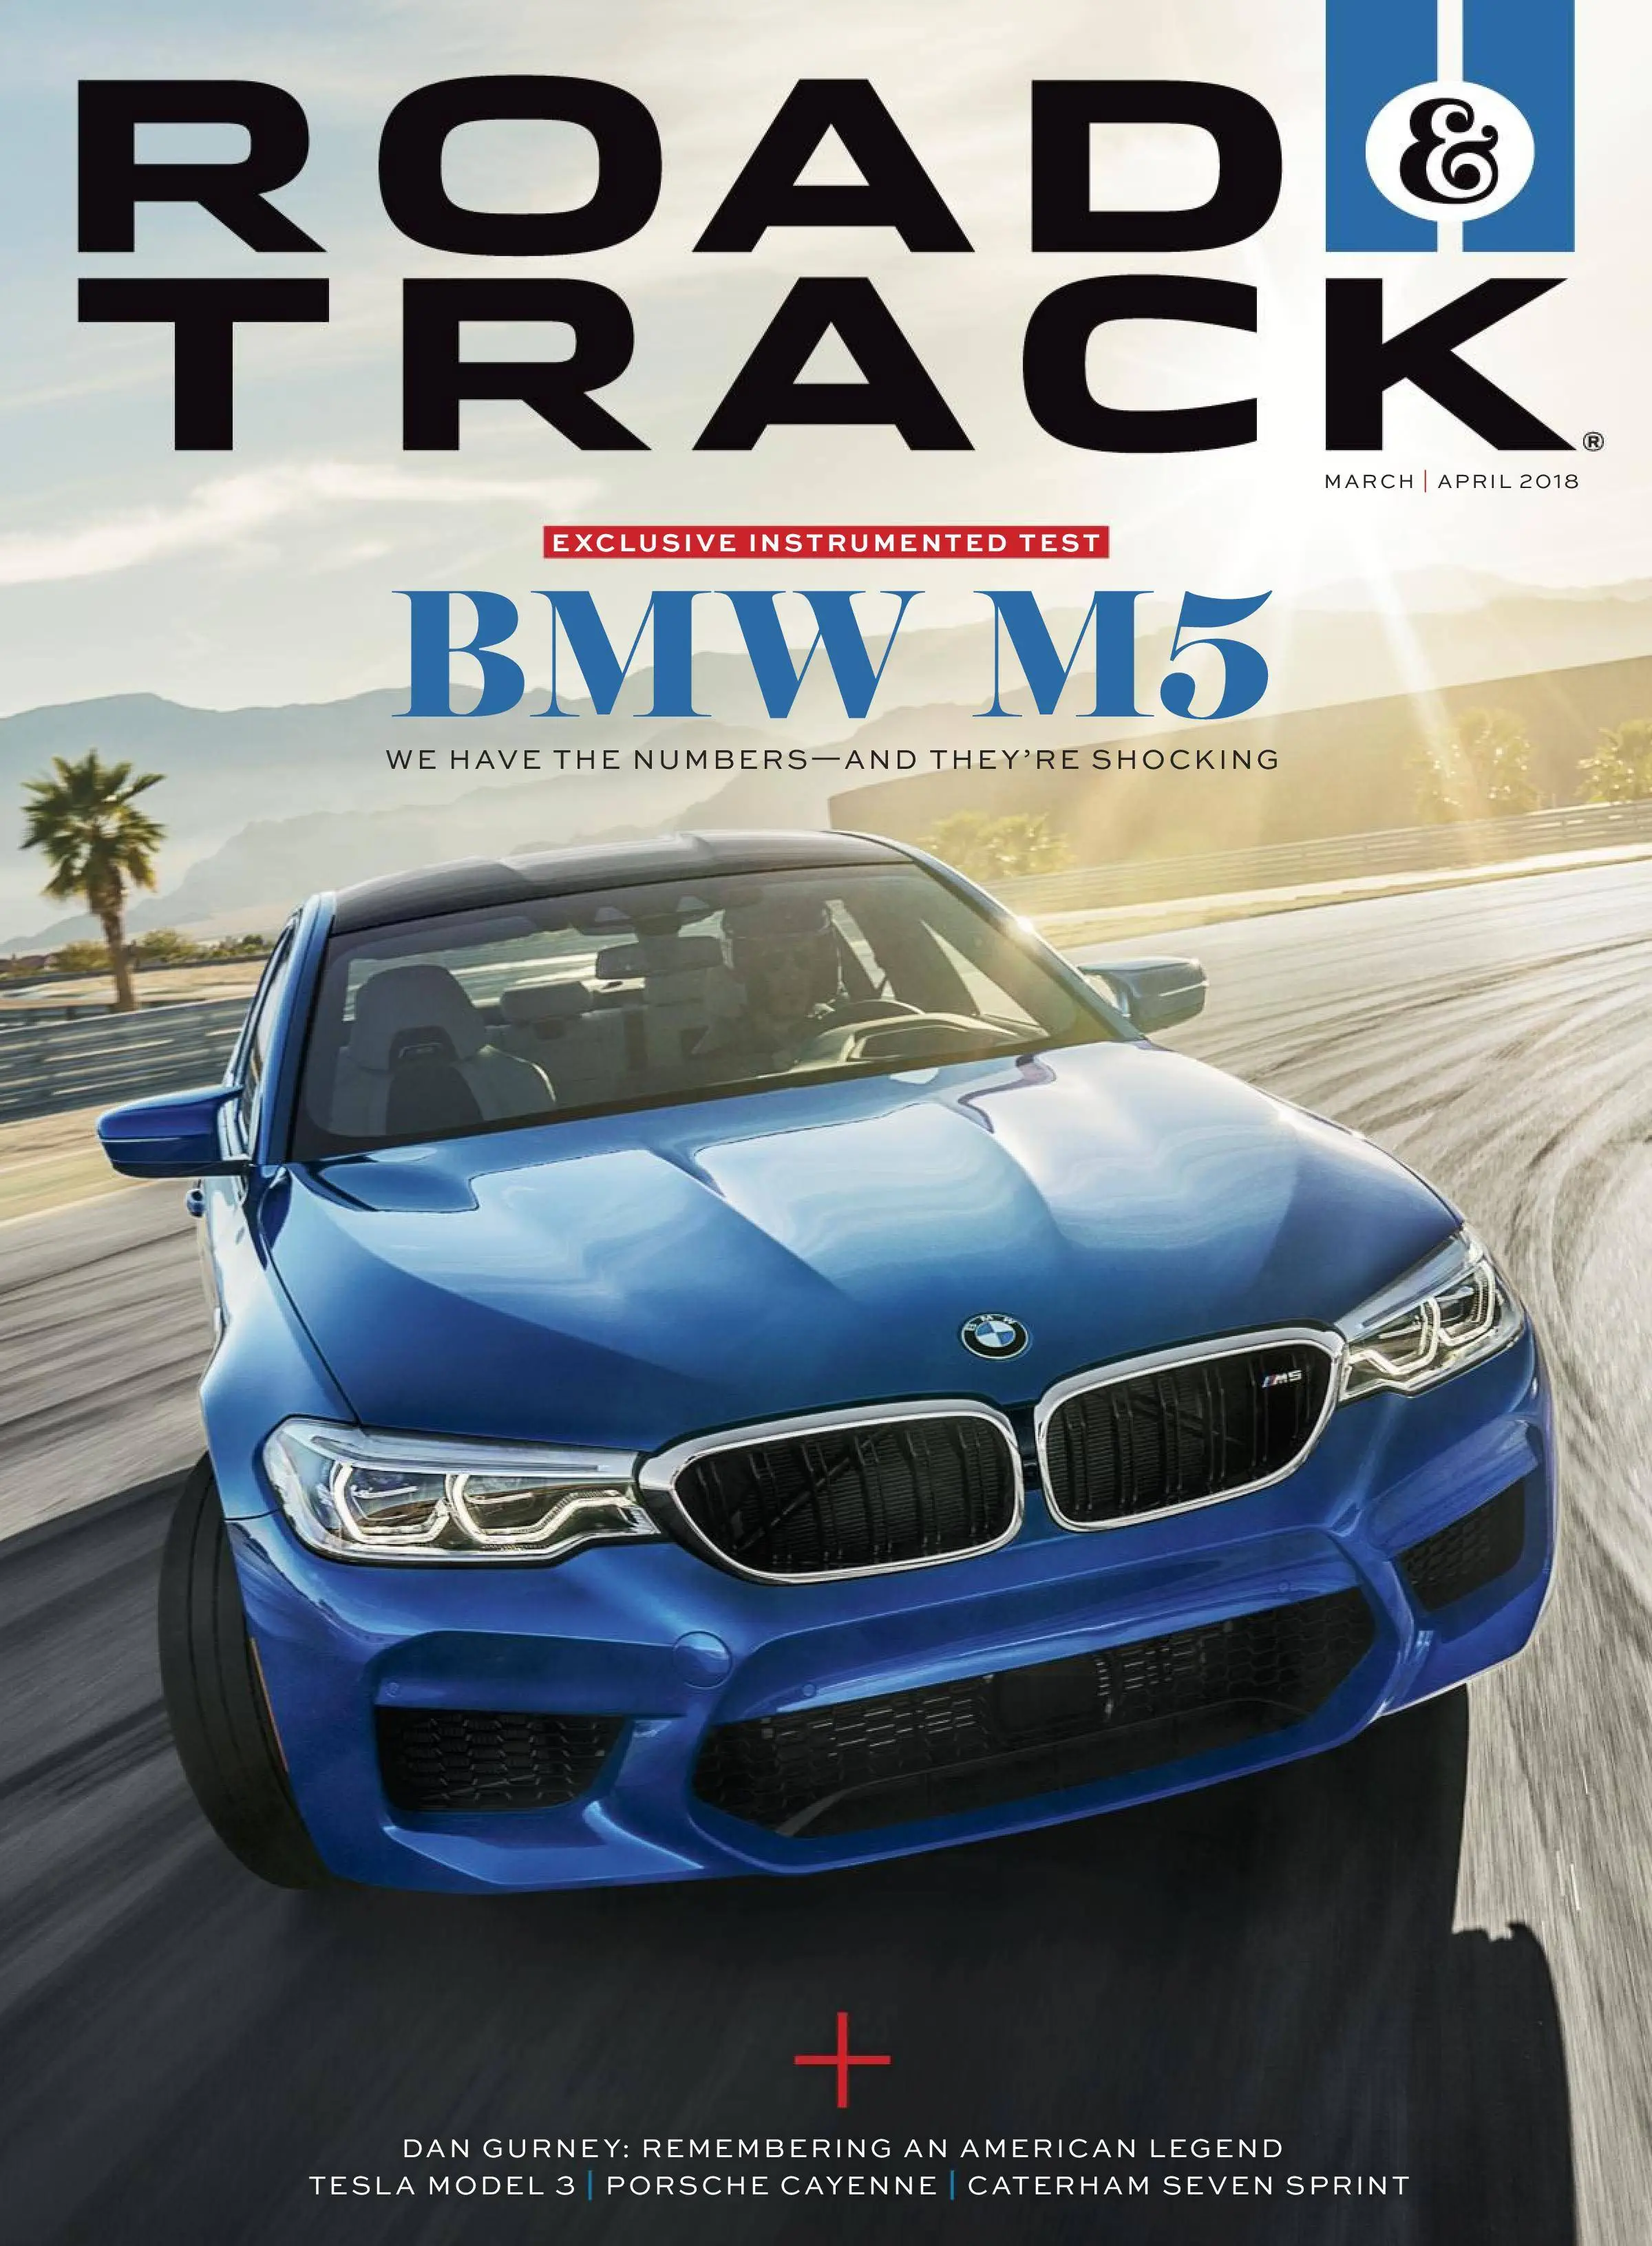 Car magazine. Road track журнал. Трековые журналы. Tracks Magazines.